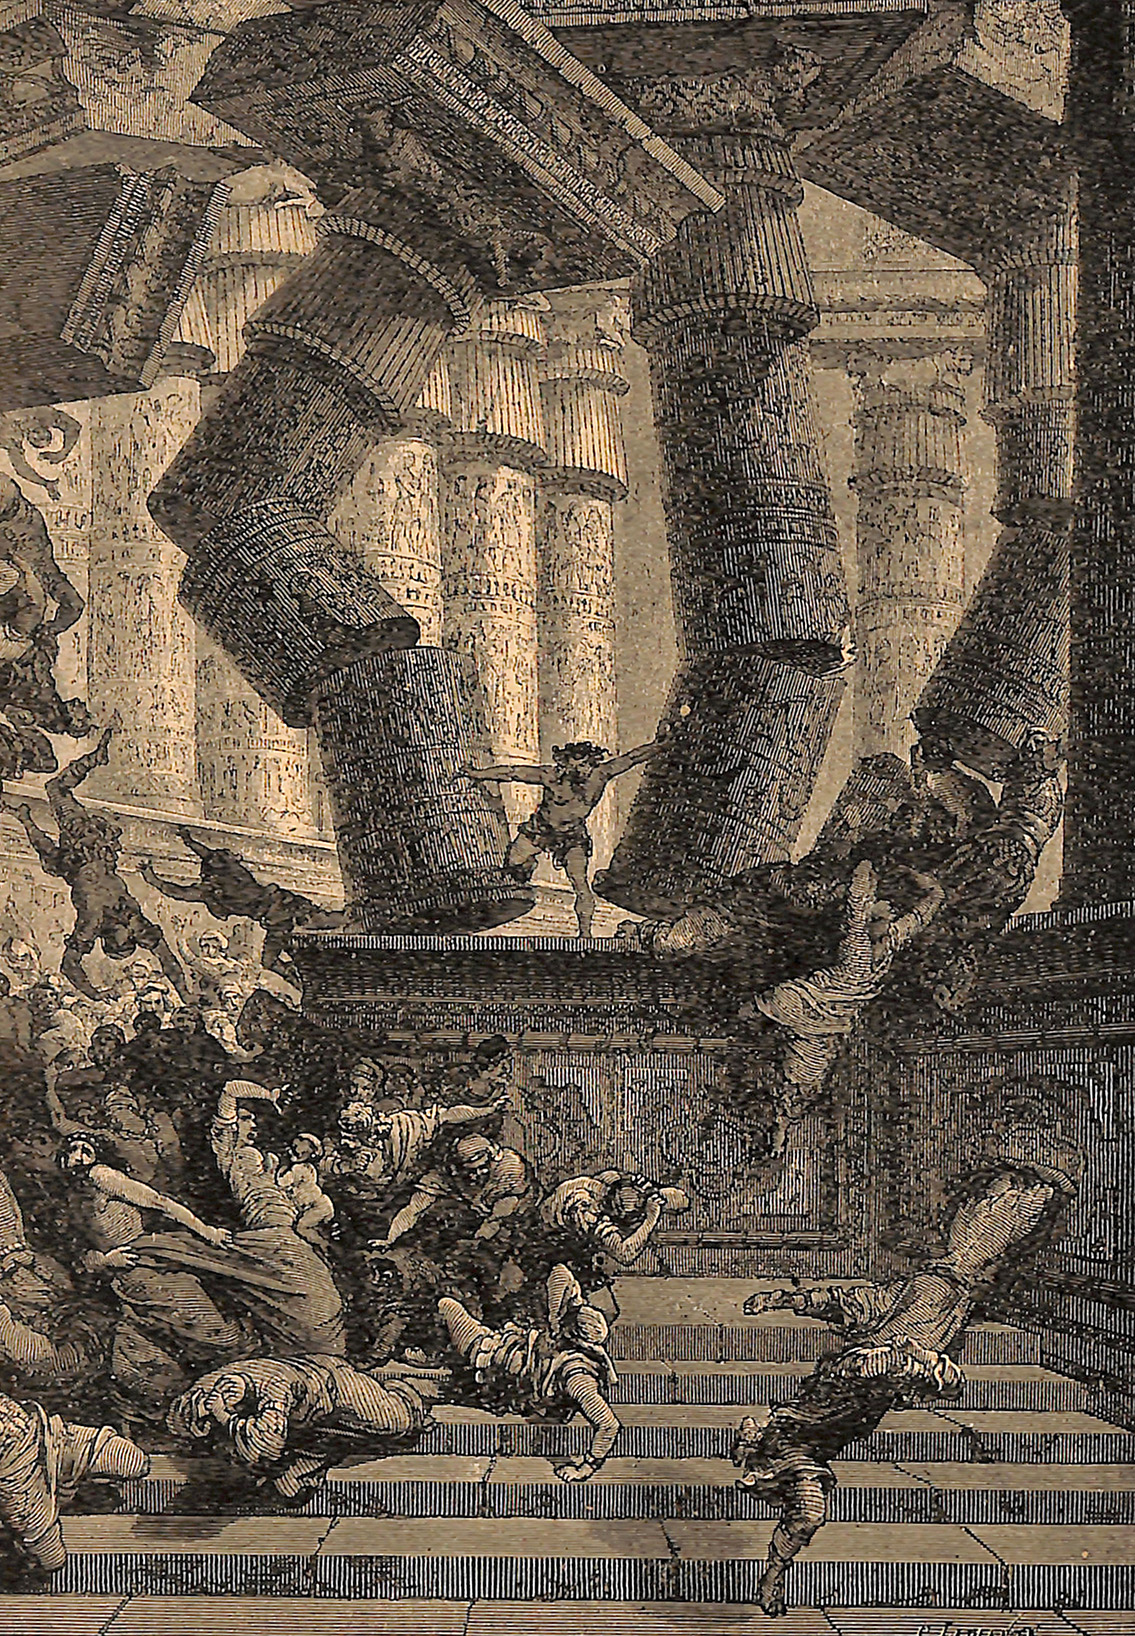 Samson Destroying The Temple